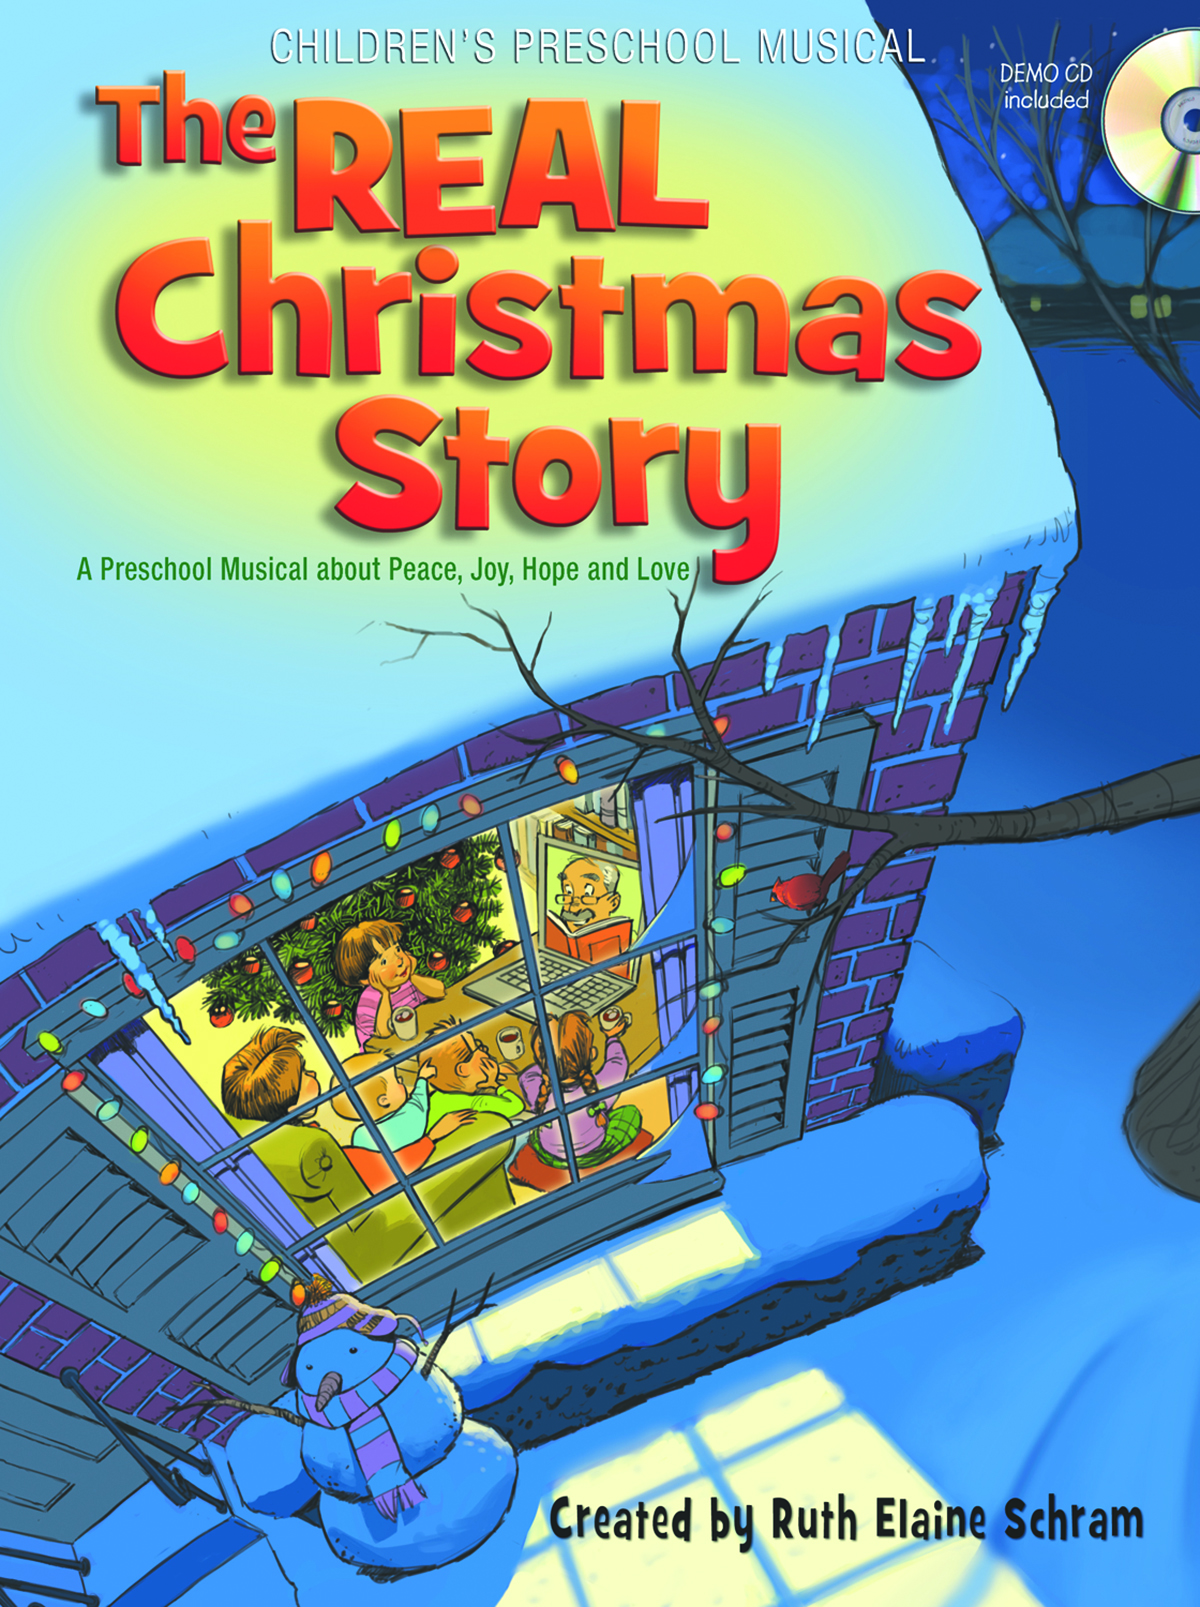 The REAL Christmas Story